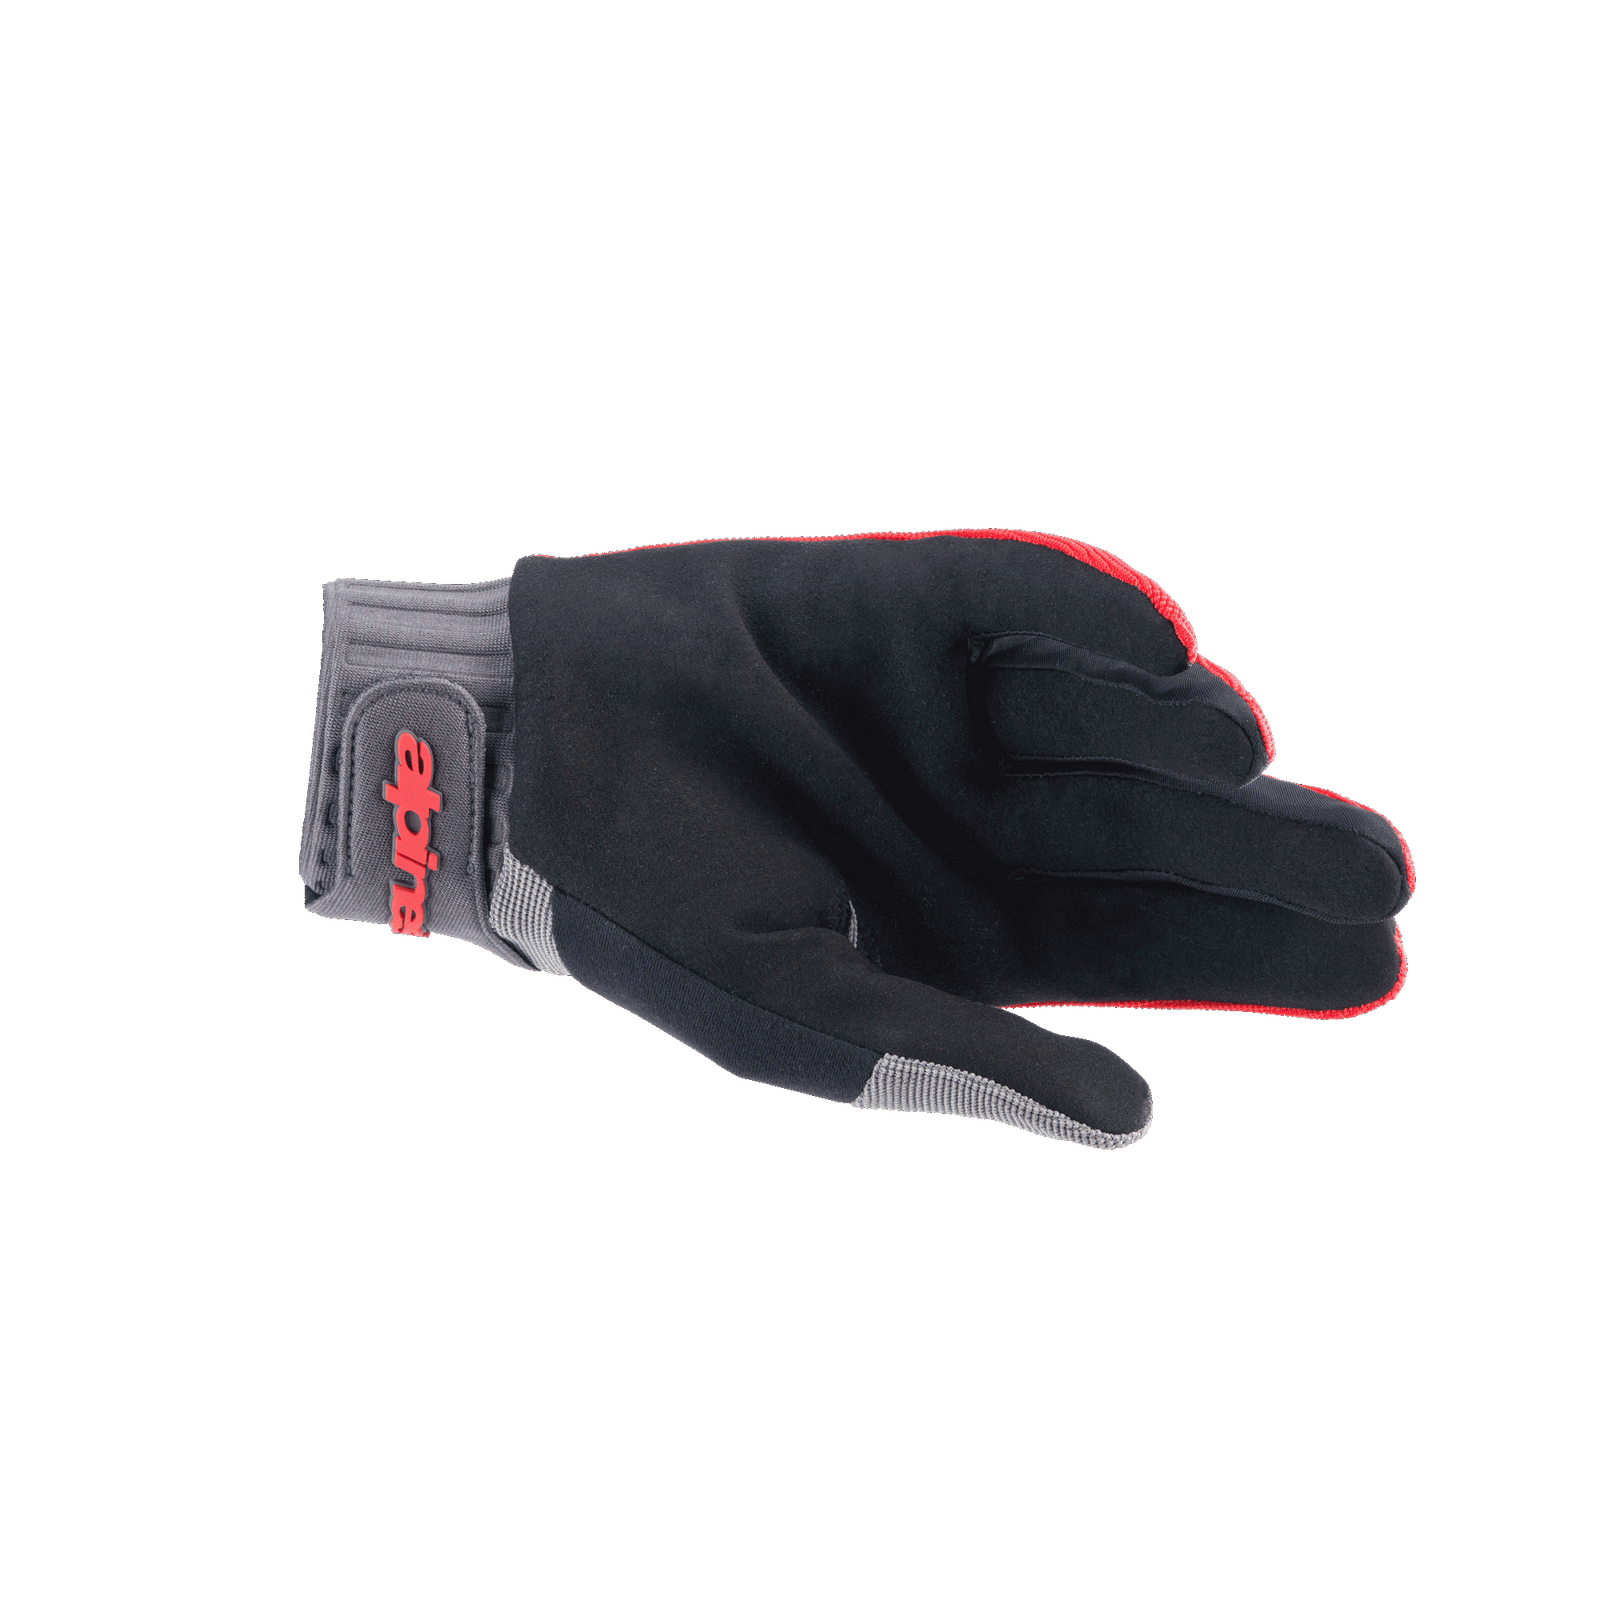 Jugendliche A-Dura Handschuhe